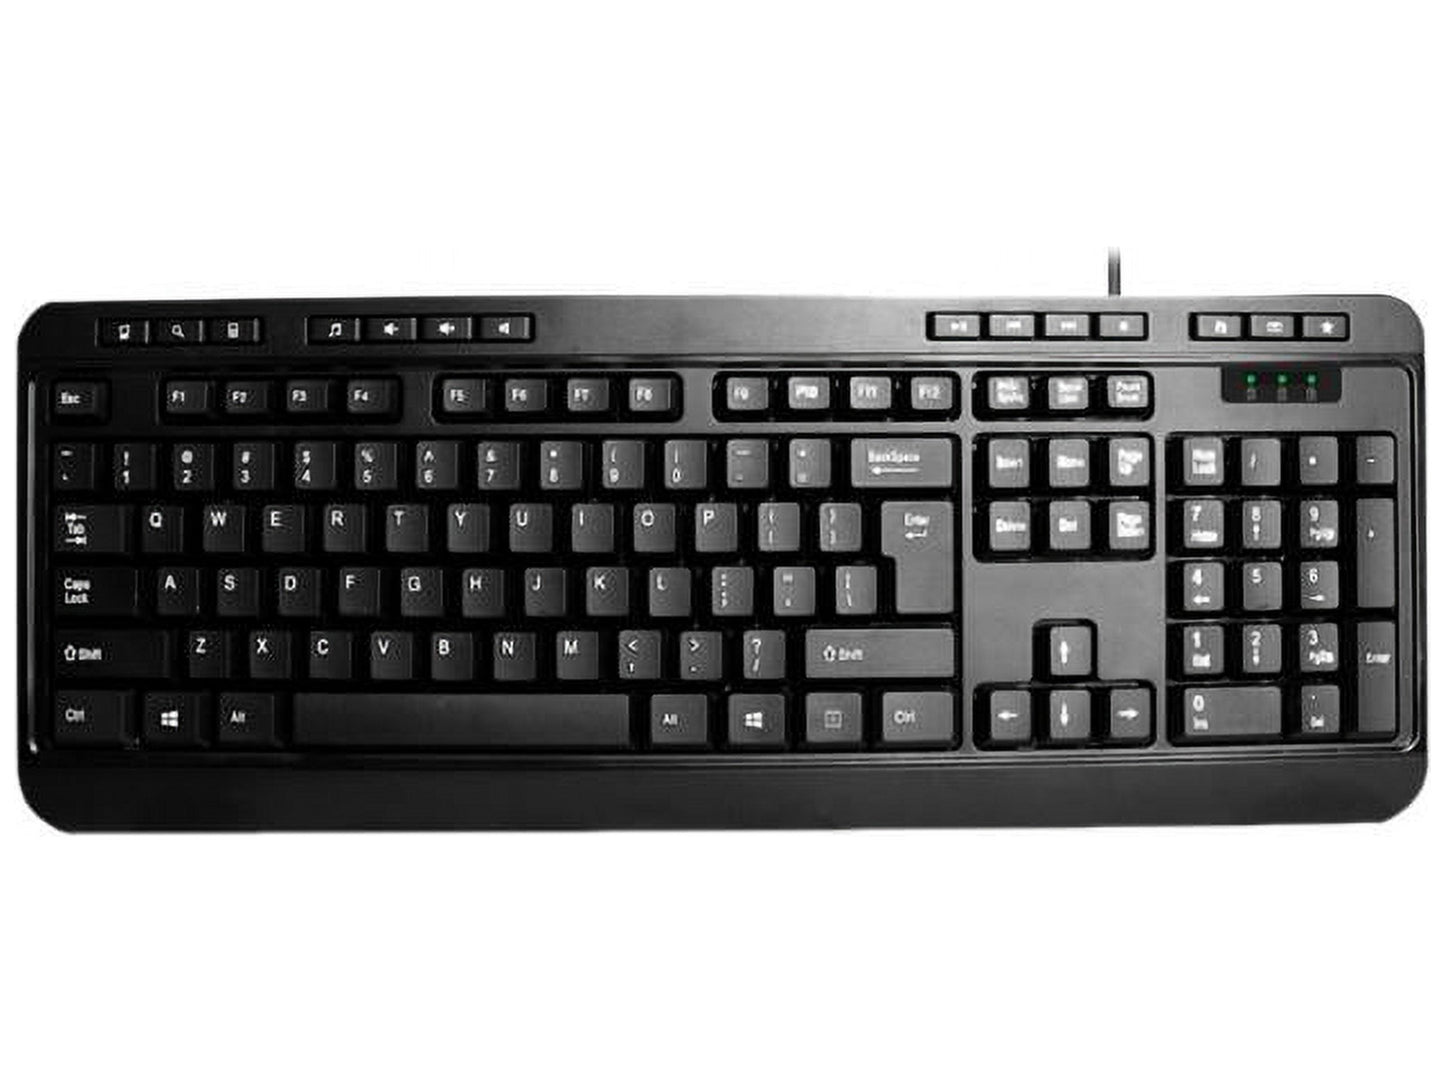 Adesso Multimedia PS/2 Keyboard - AKB-132PB